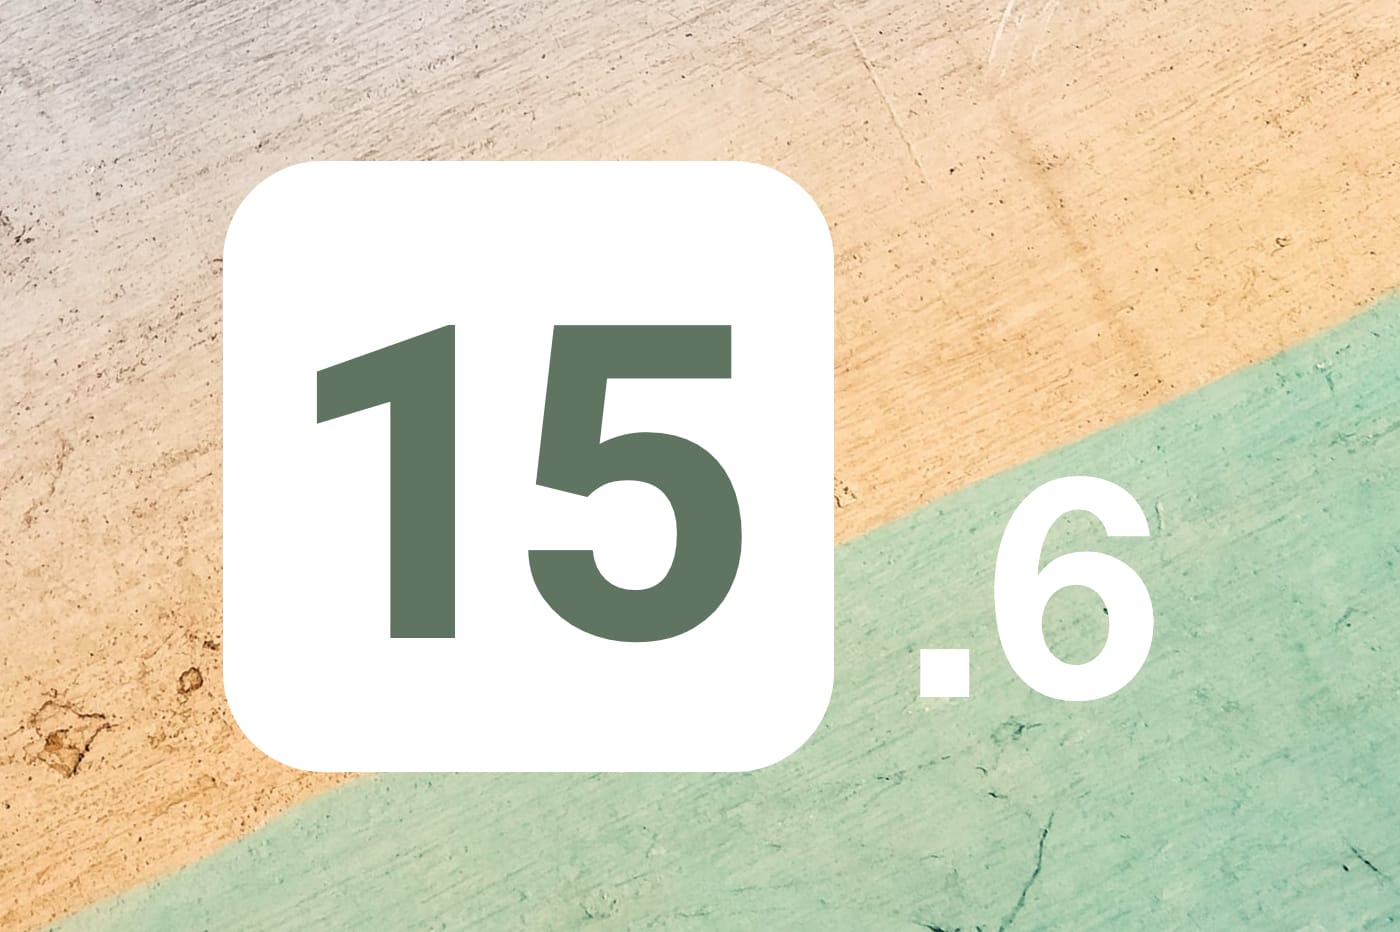 iOS 15.6 fond vert brun